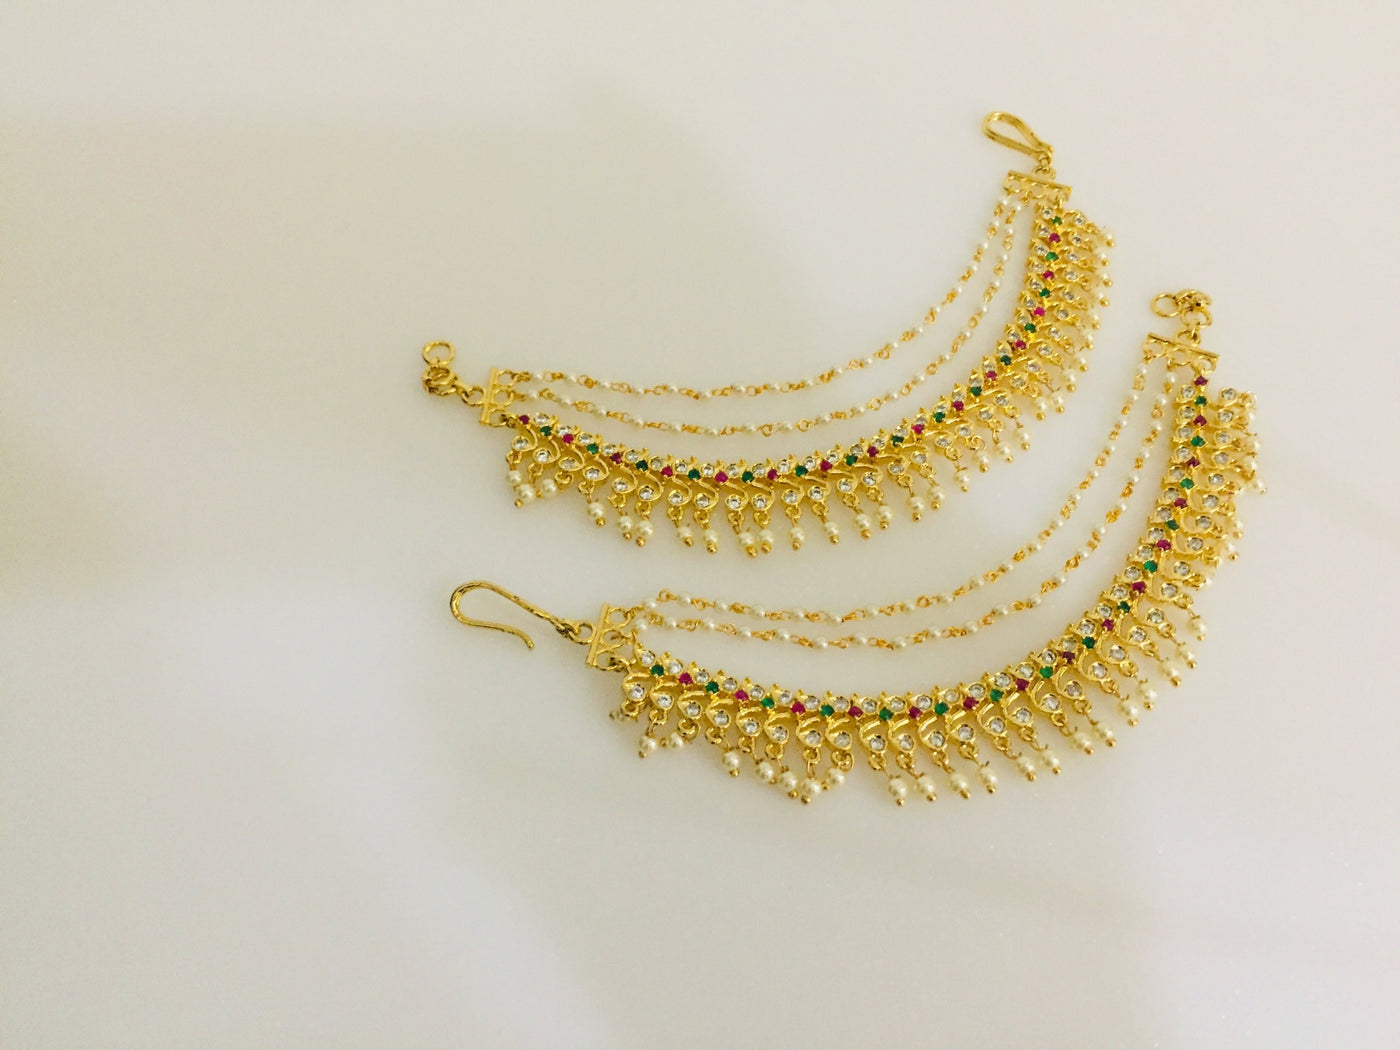 1 Gram Gold Earrings Chain/Champaswaralu/Maatal/Kaan Chain with Semi Rubies and Emeralds - Sakkhi Style